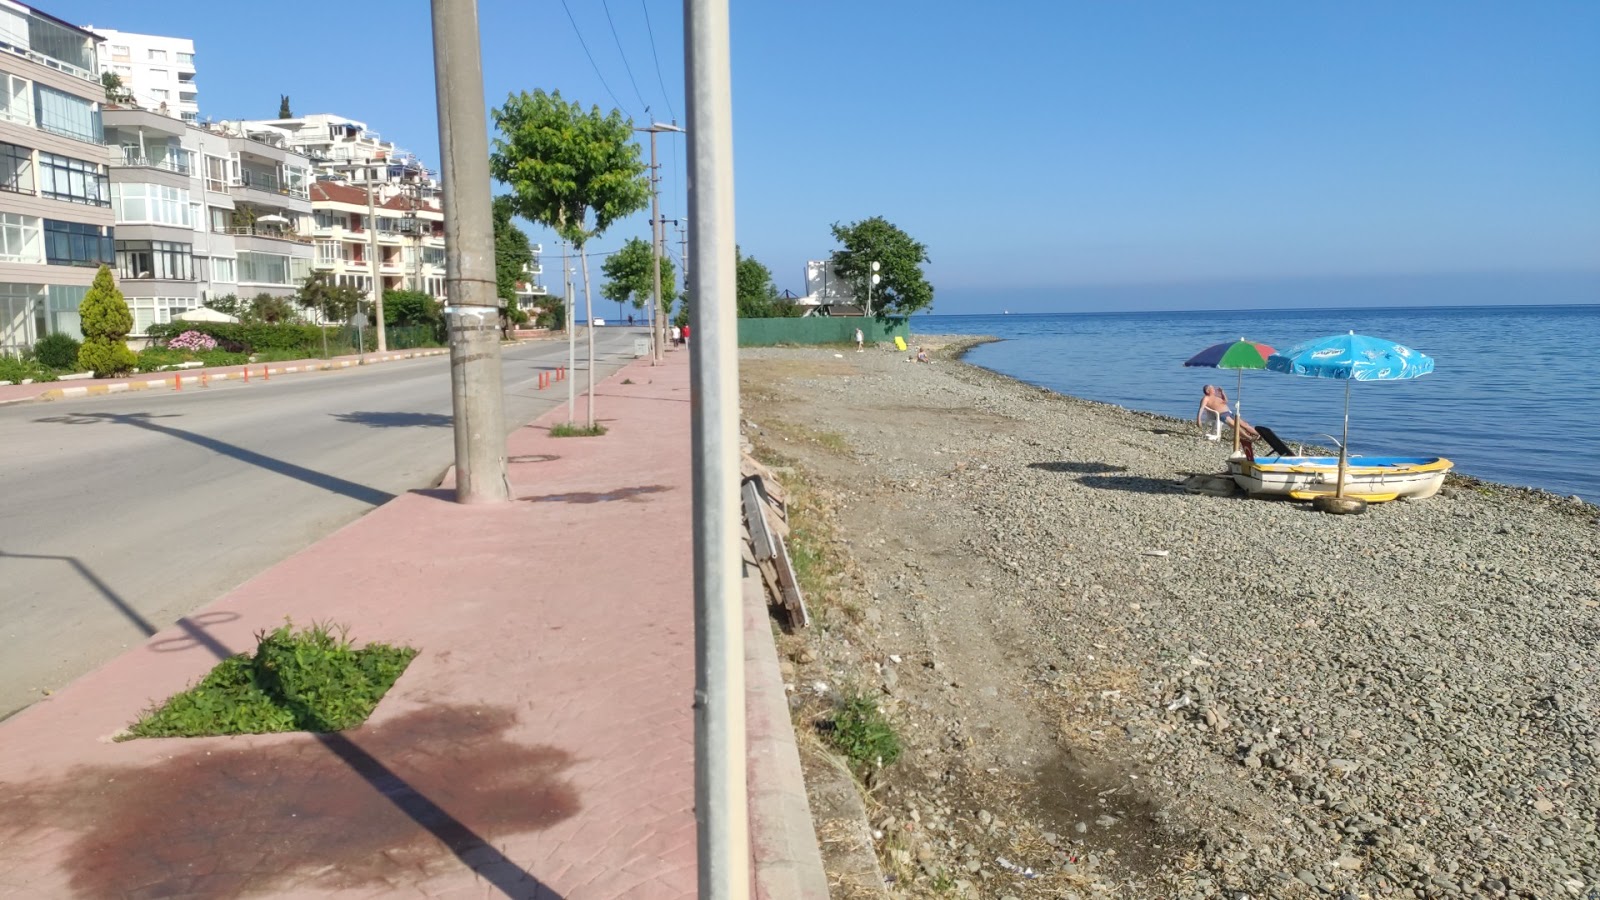 Fotografie cu Cinarcik beach cu nivelul de curățenie in medie